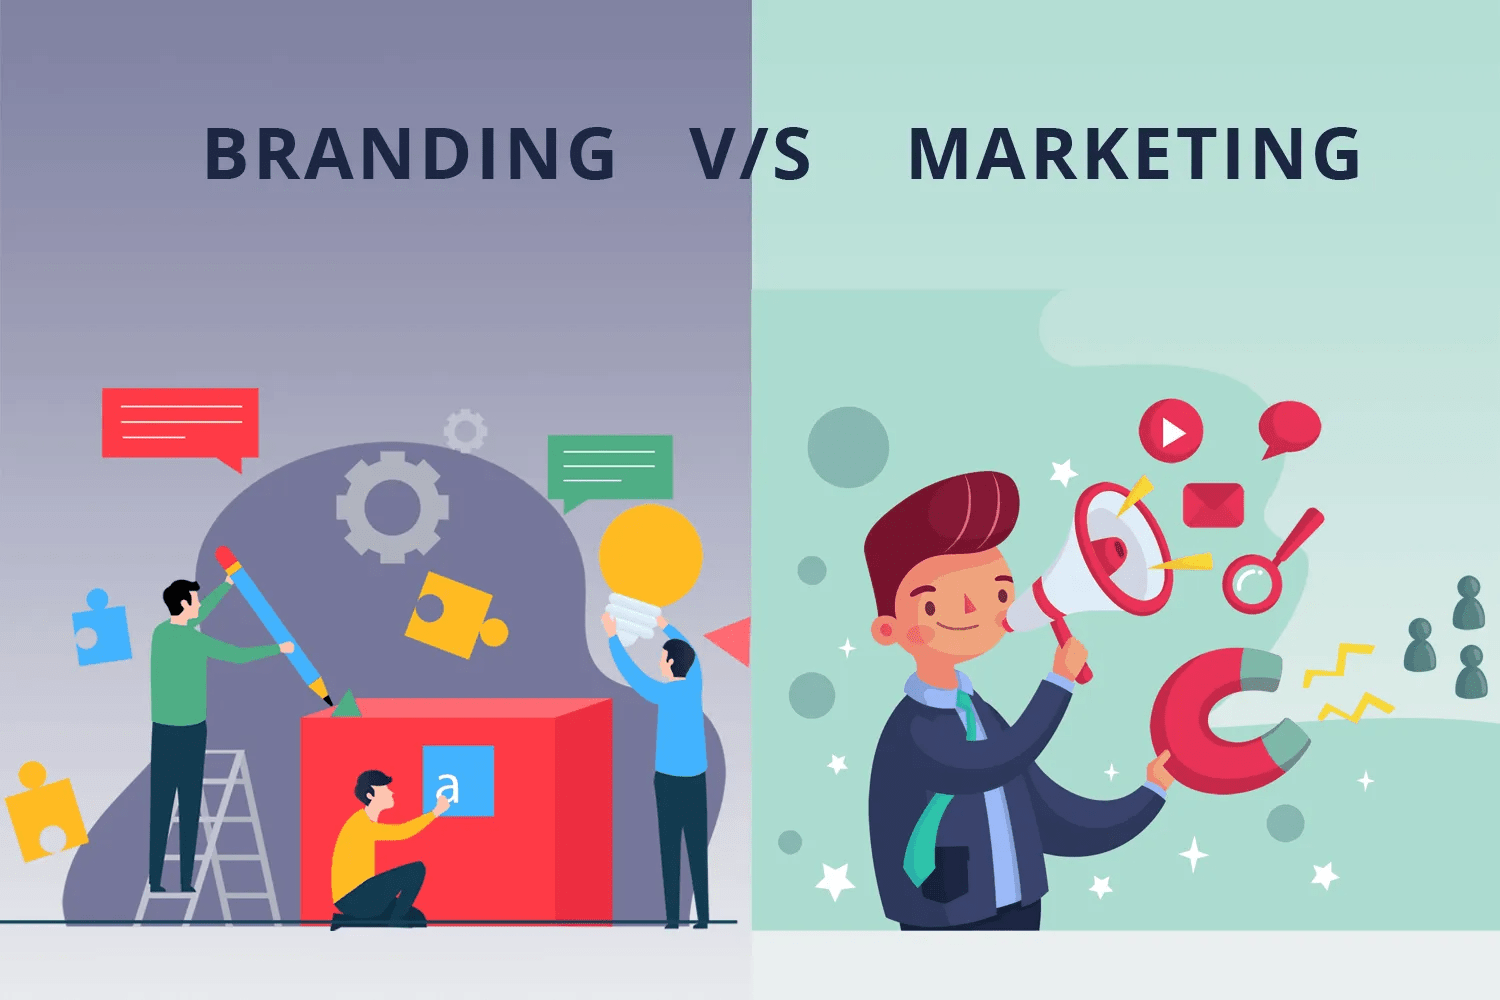 Branding vs Marketing concept image.